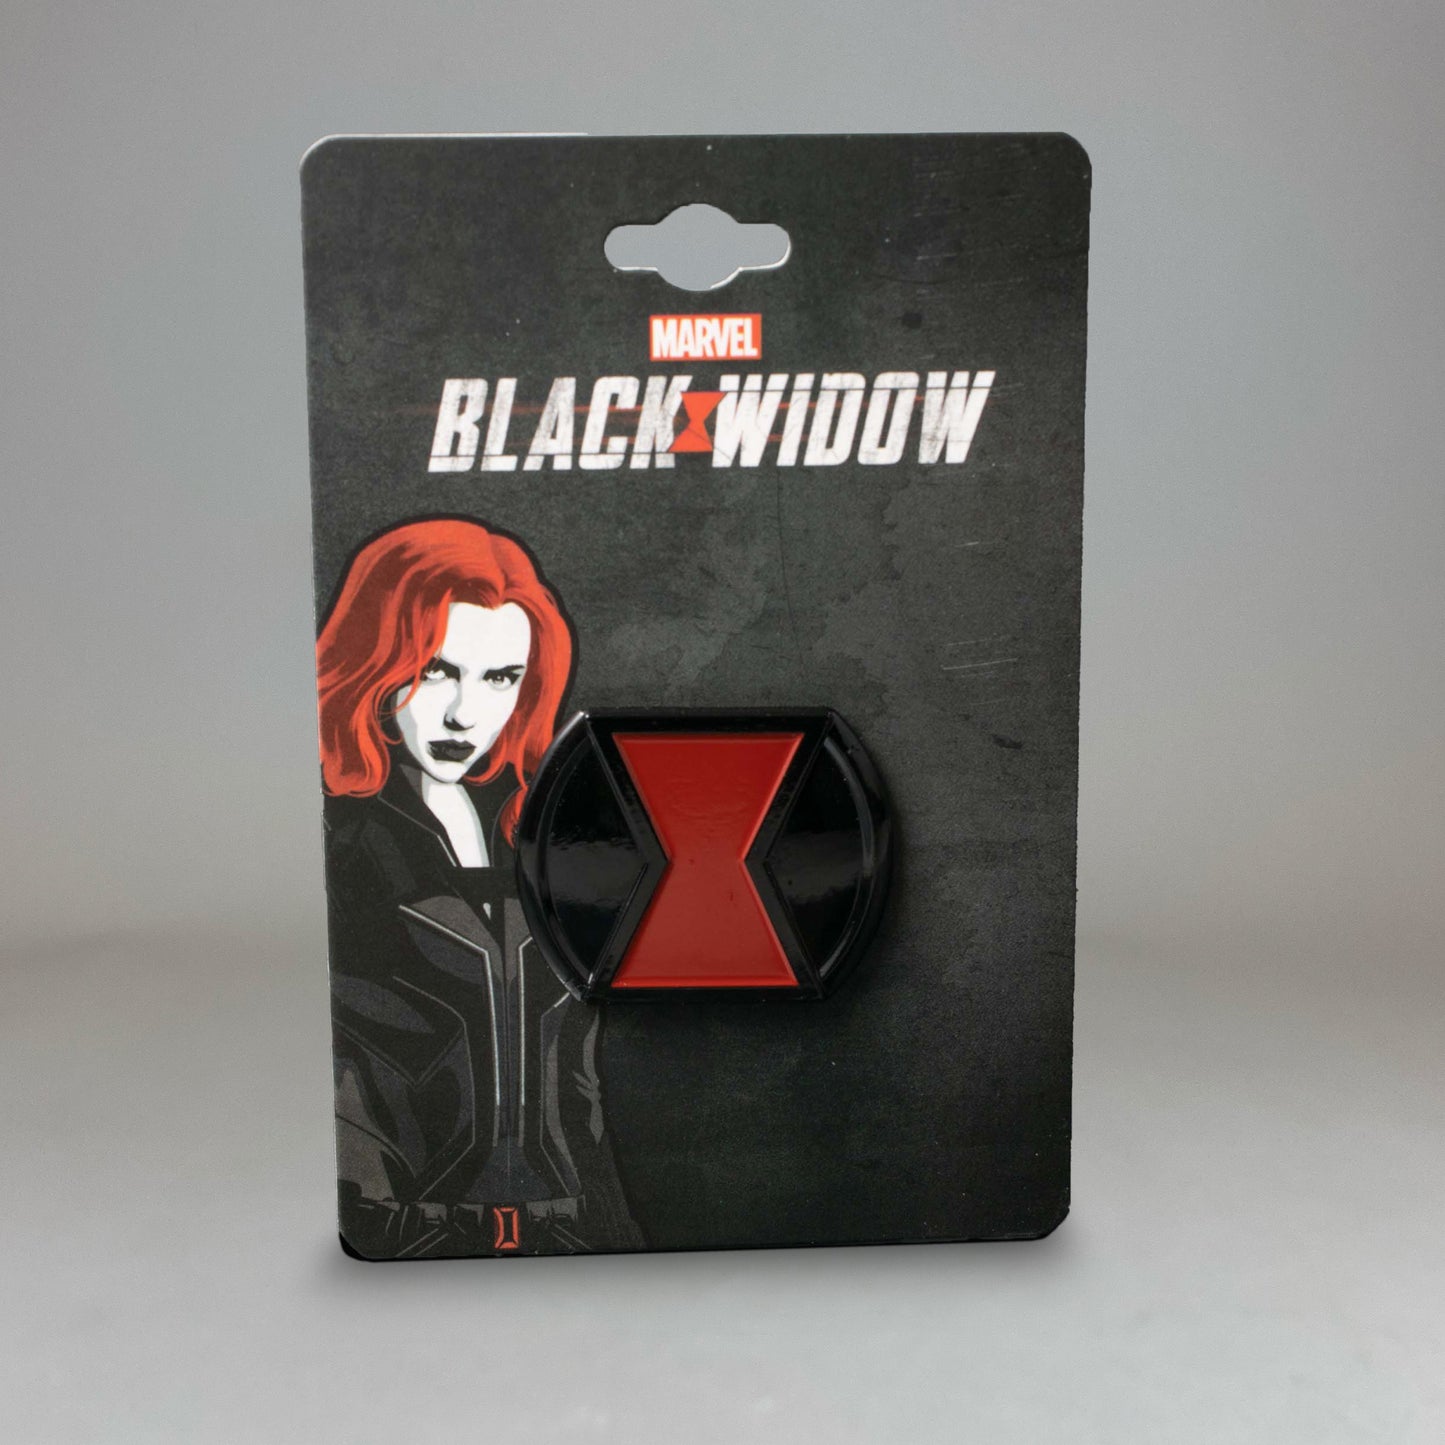 Load image into Gallery viewer, Black Widow Belt Buckle Emblem (Marvel) Metal Enamel Pin
